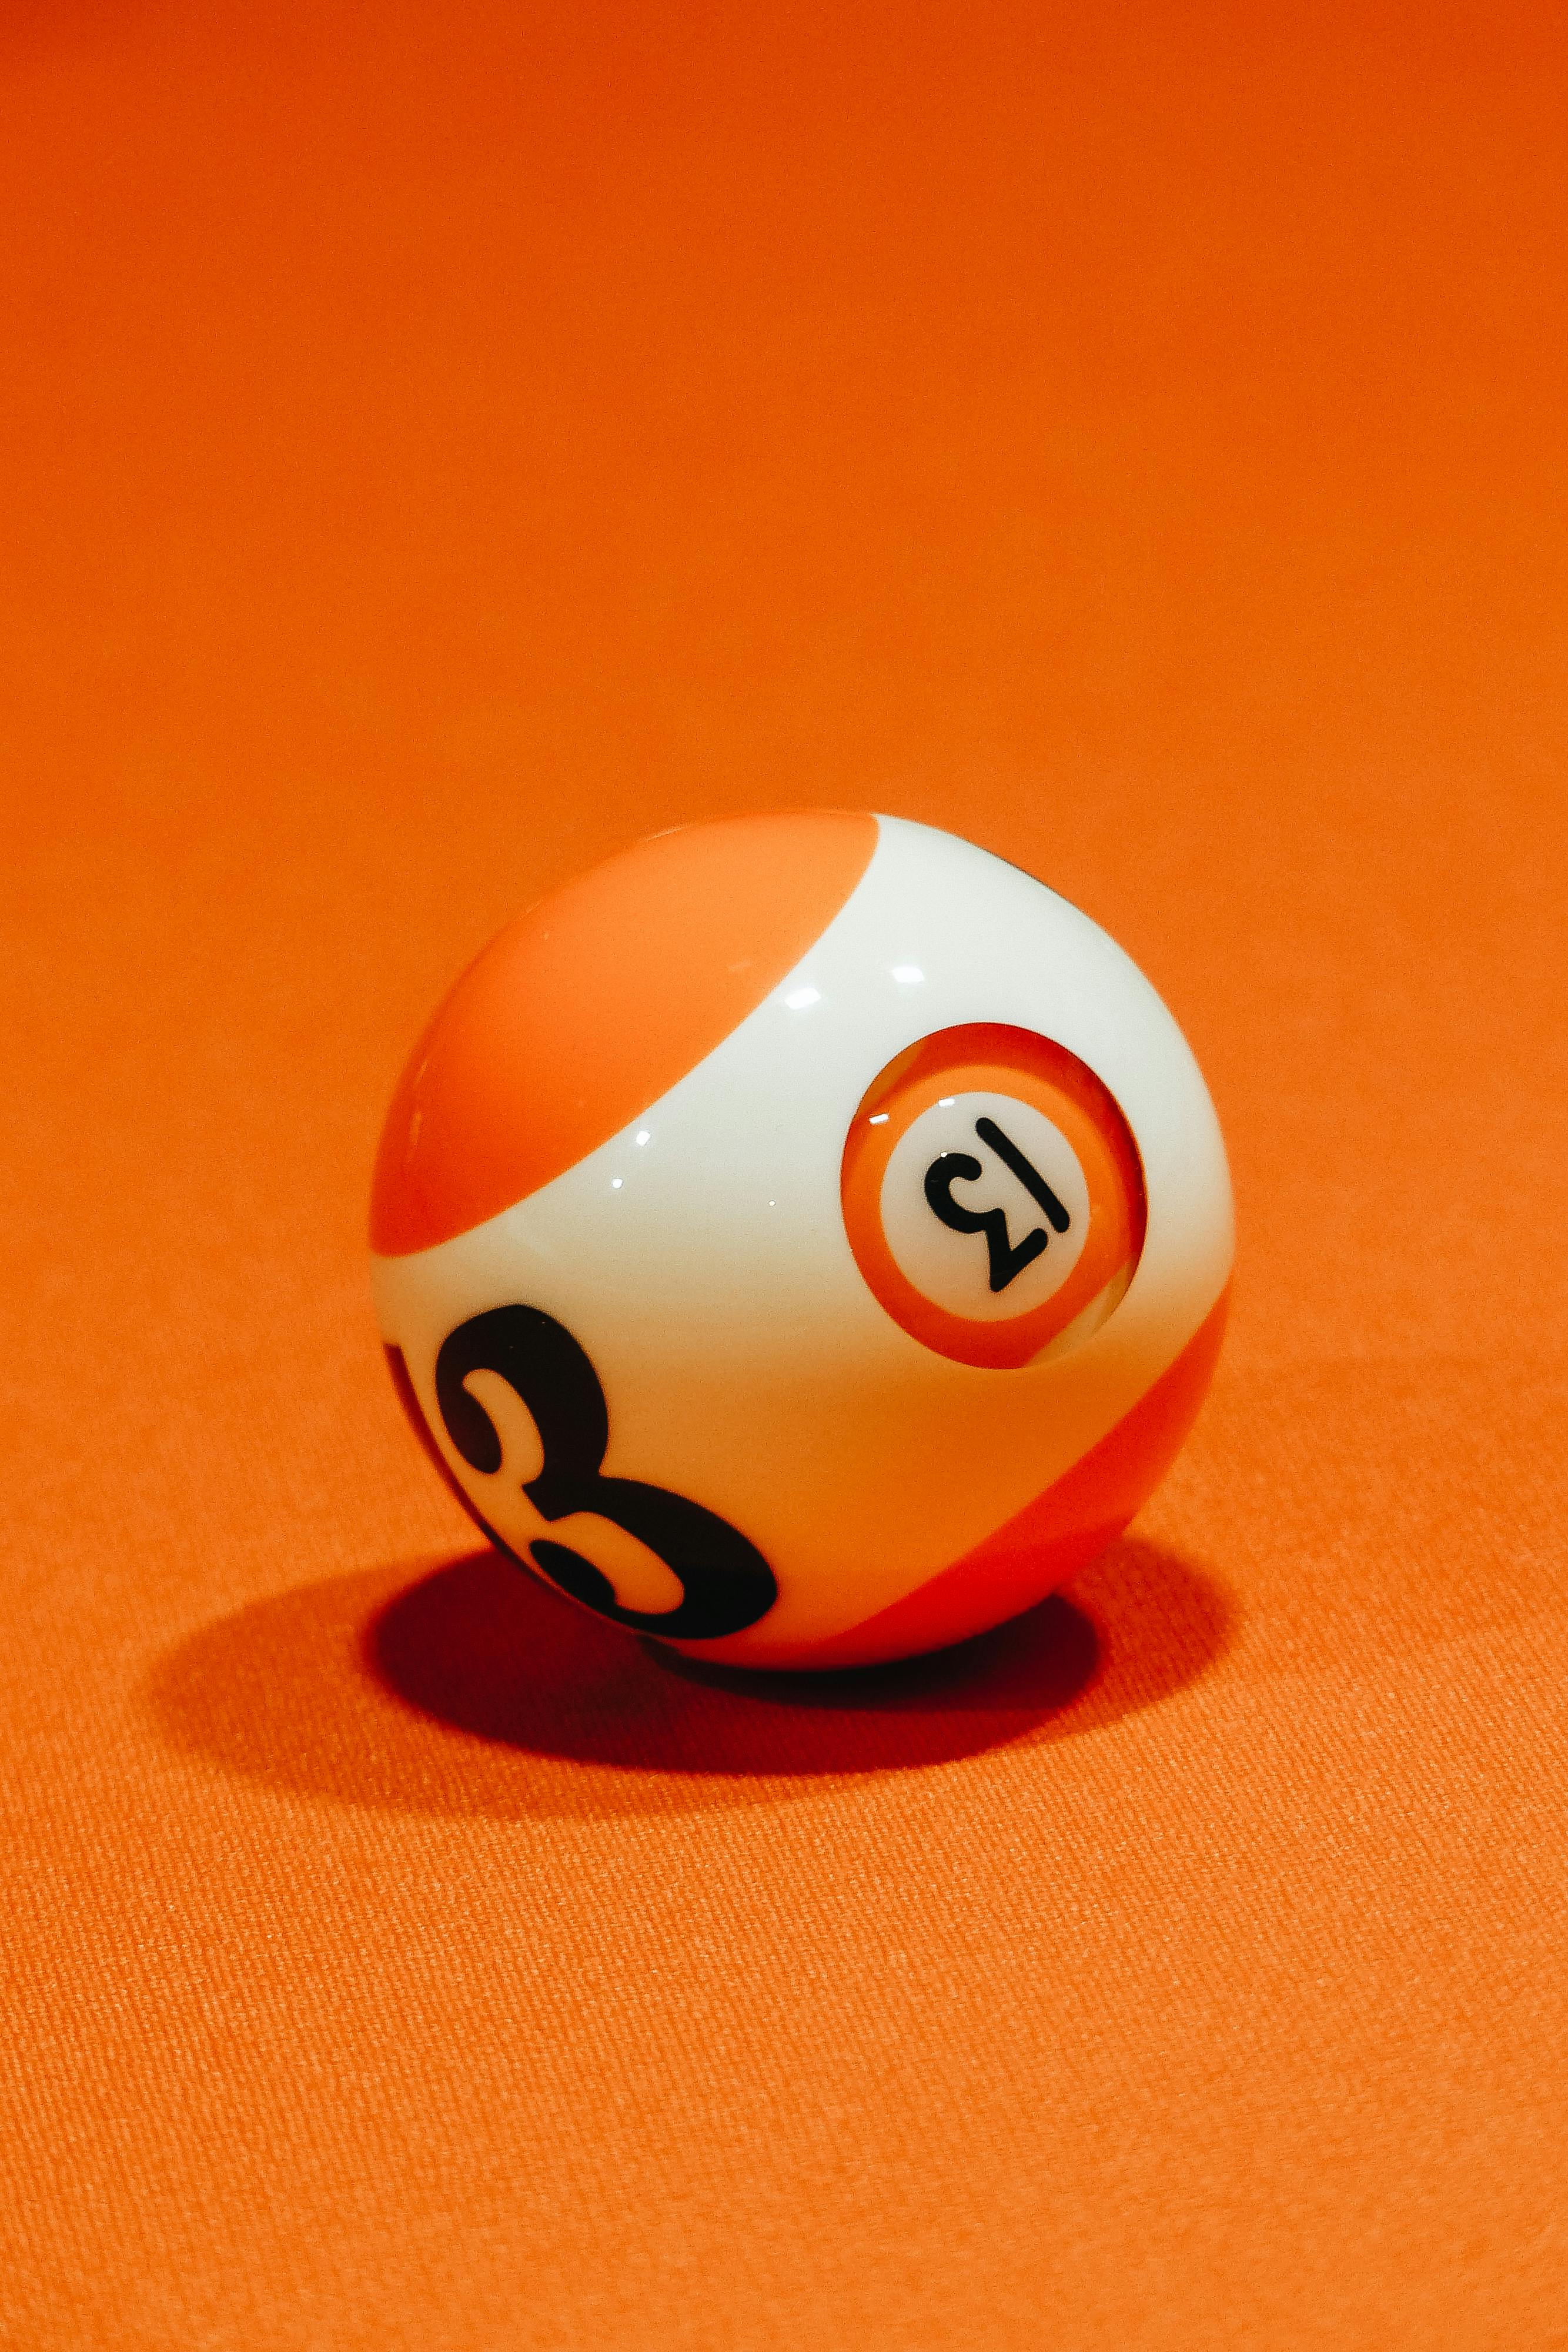 Number 13 billiard ball on an orange background